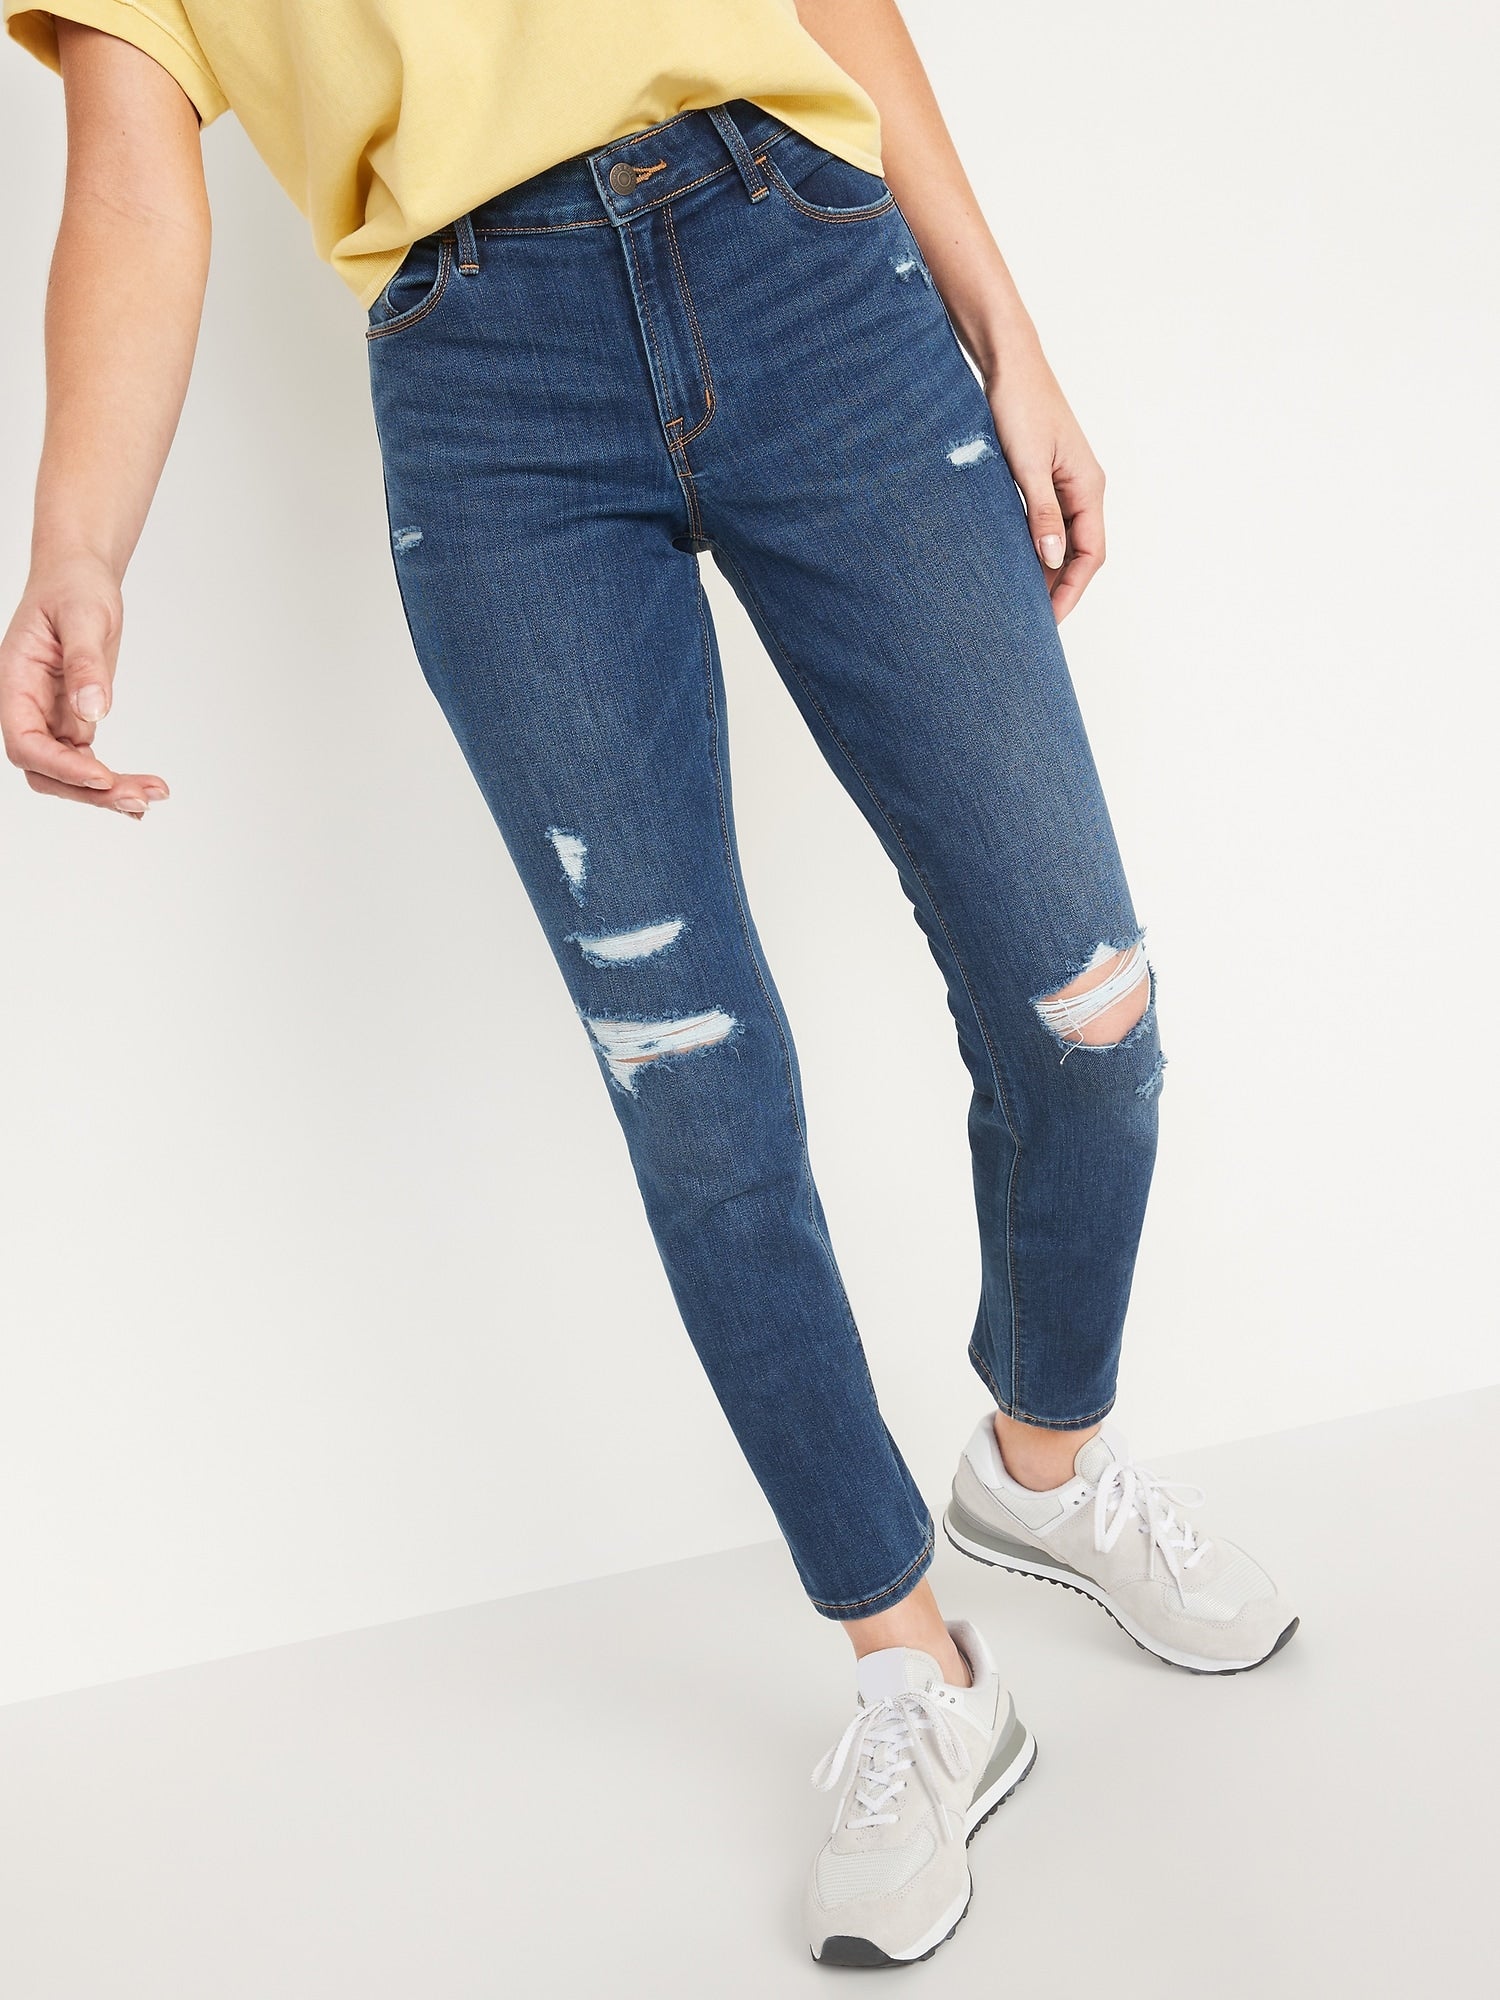 Jeans Rectos Power Slim Distressed de Talle Medio, Mujer